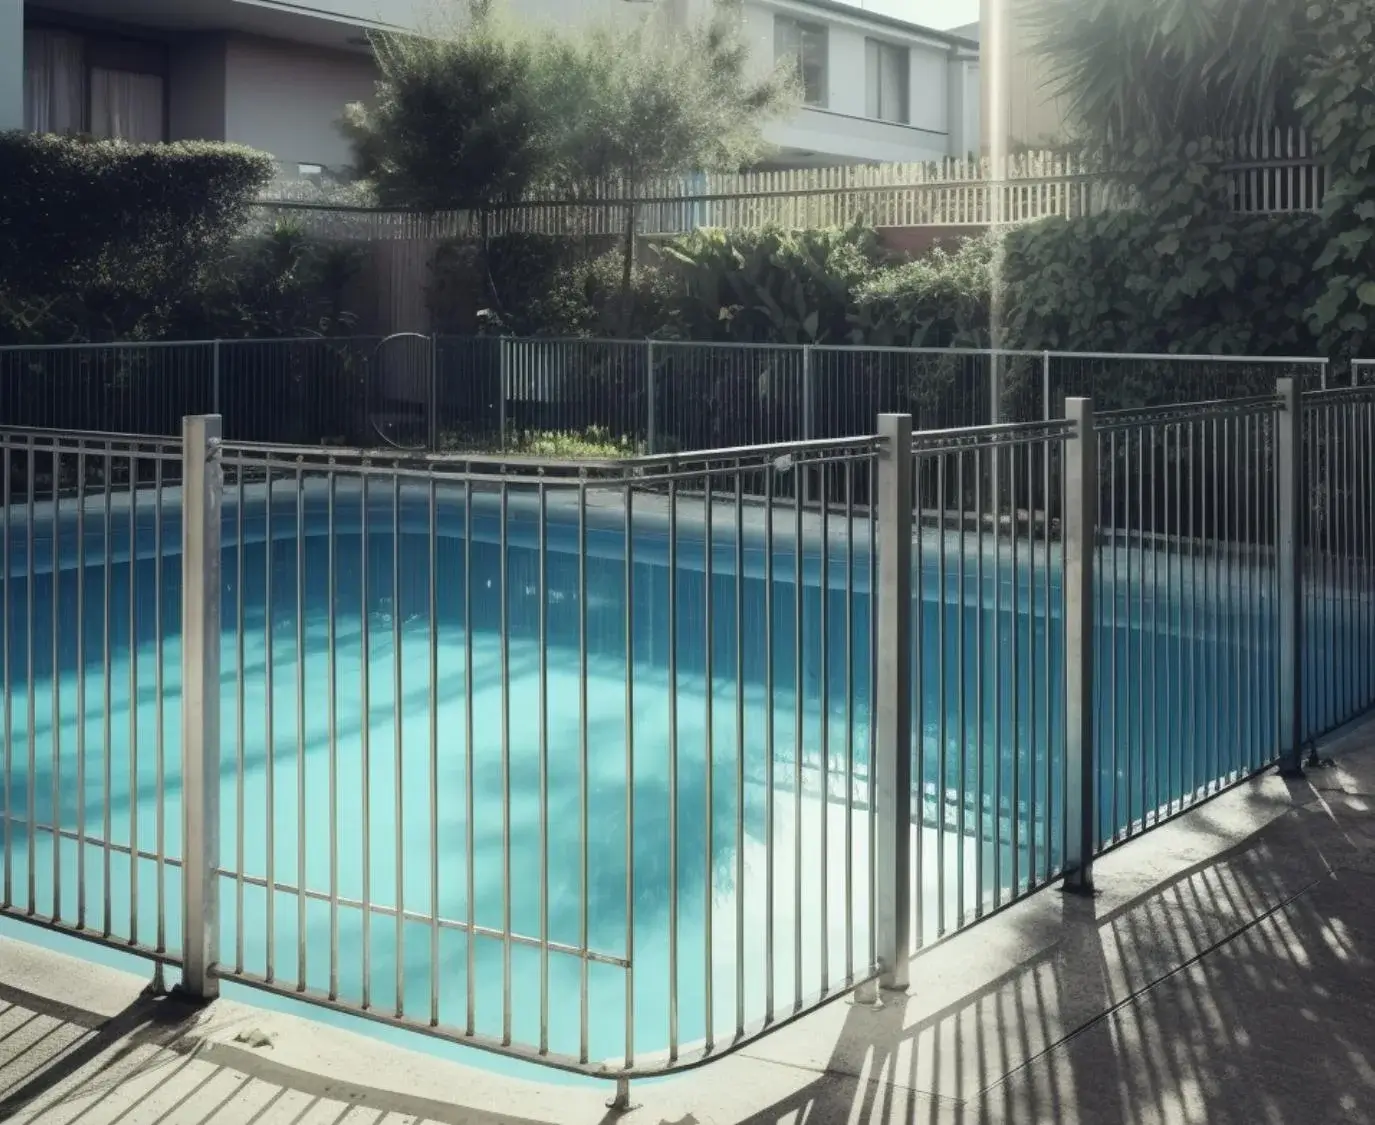 A backyard pool with an aluminium fence surrounding it